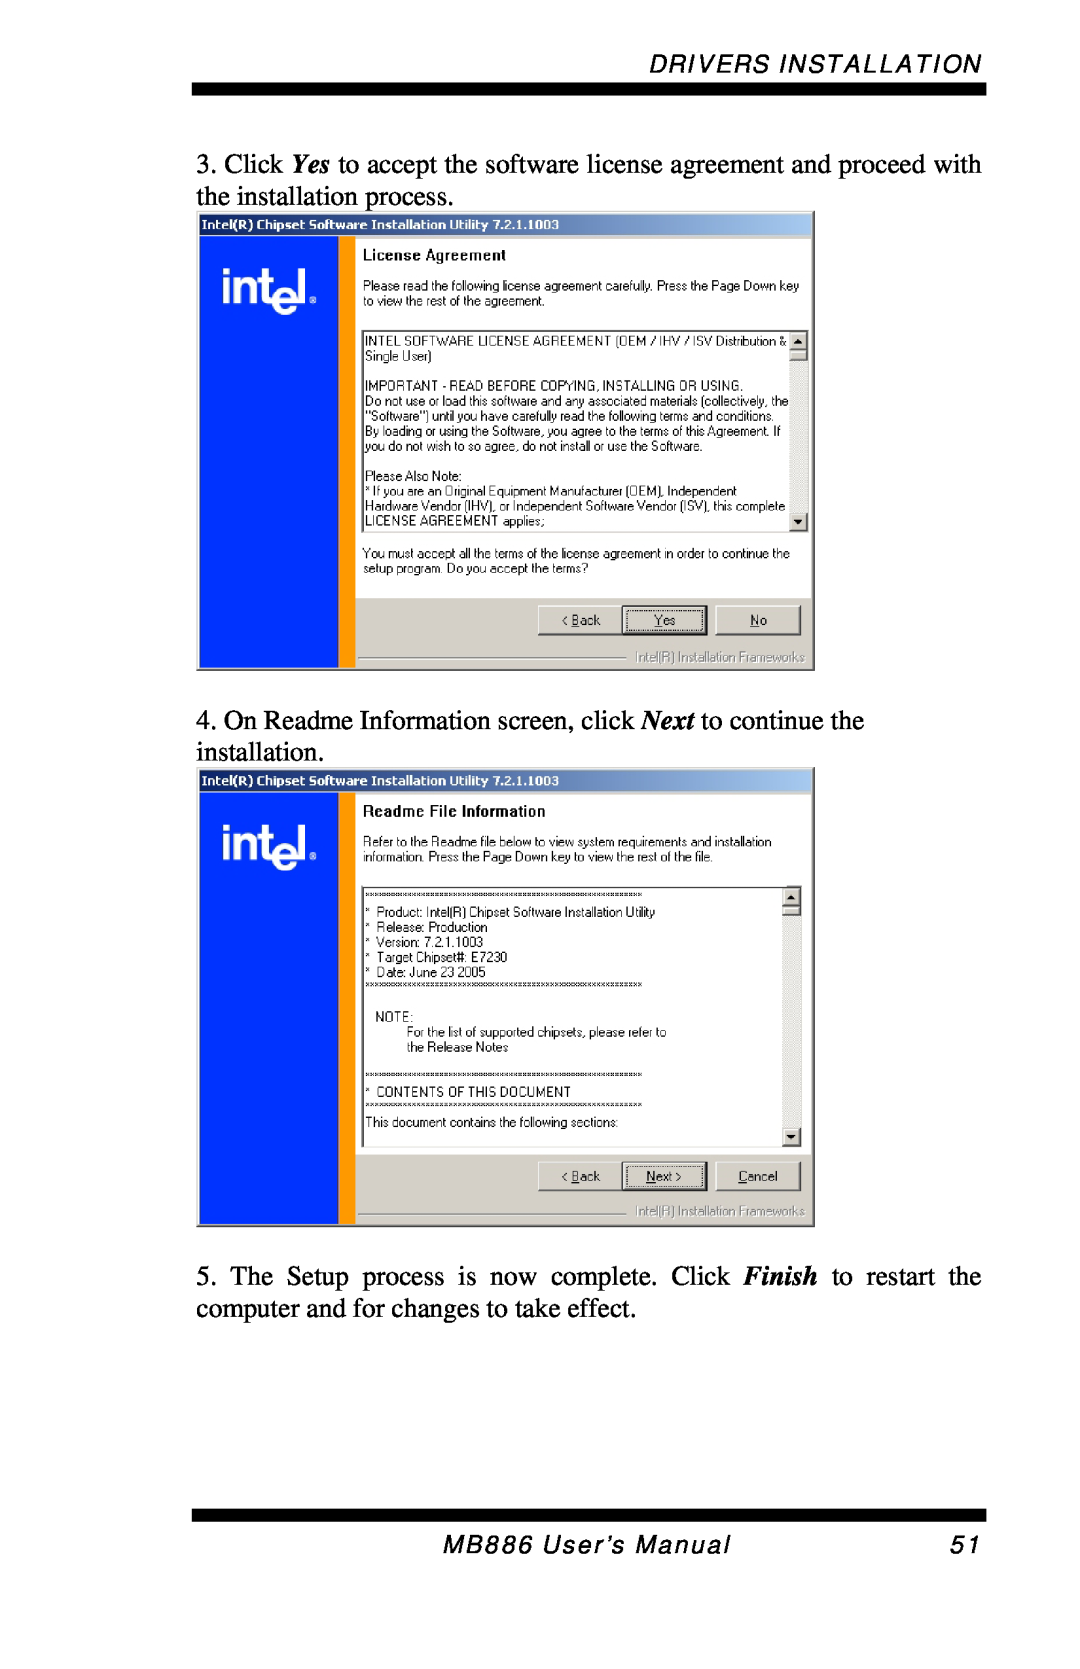 Intel MB886 user manual Drivers Installation 